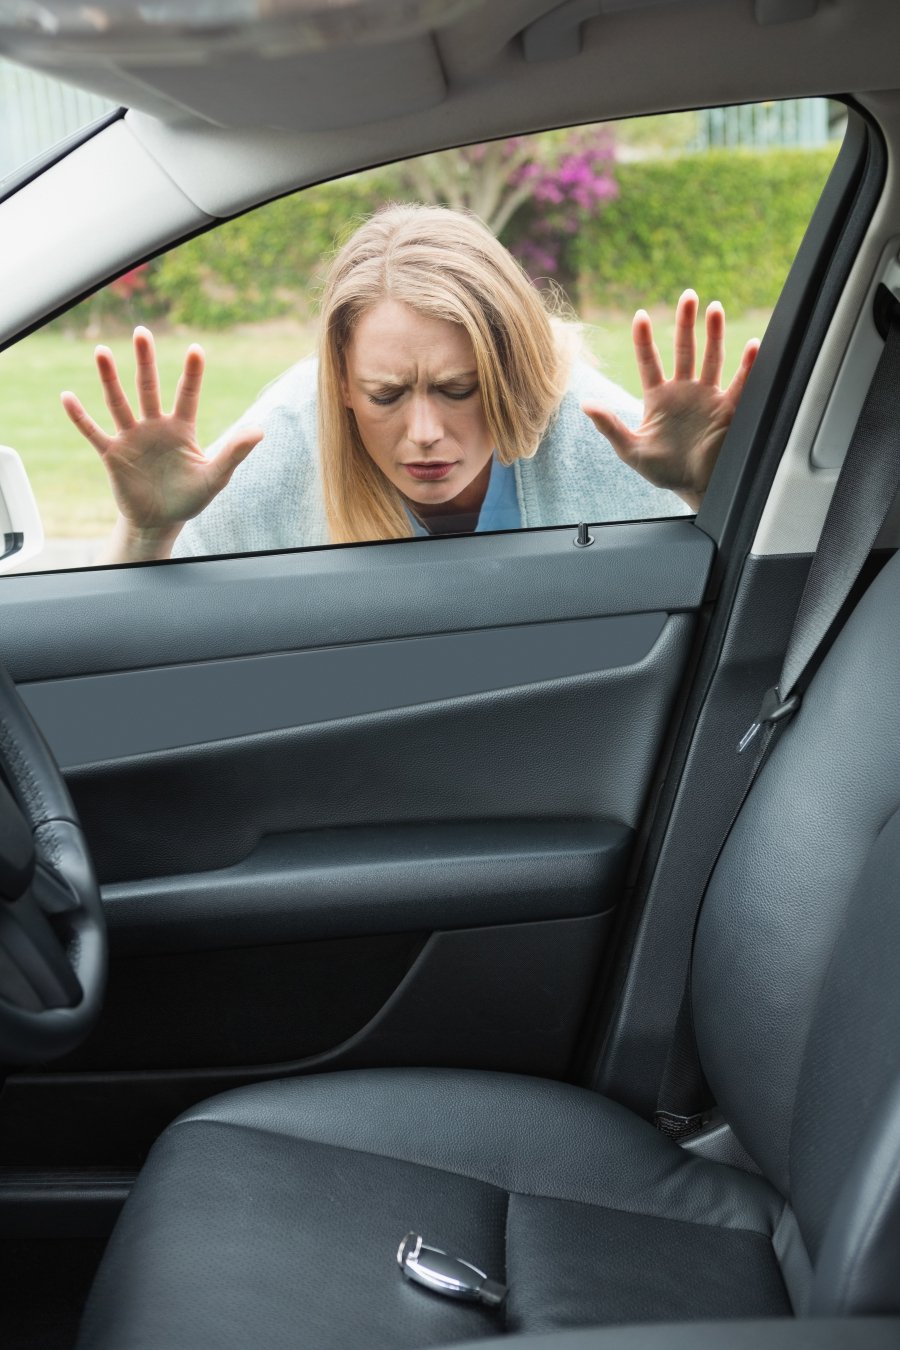 Car Locksmith Provo: Stop Locking Your Keys In Your Car